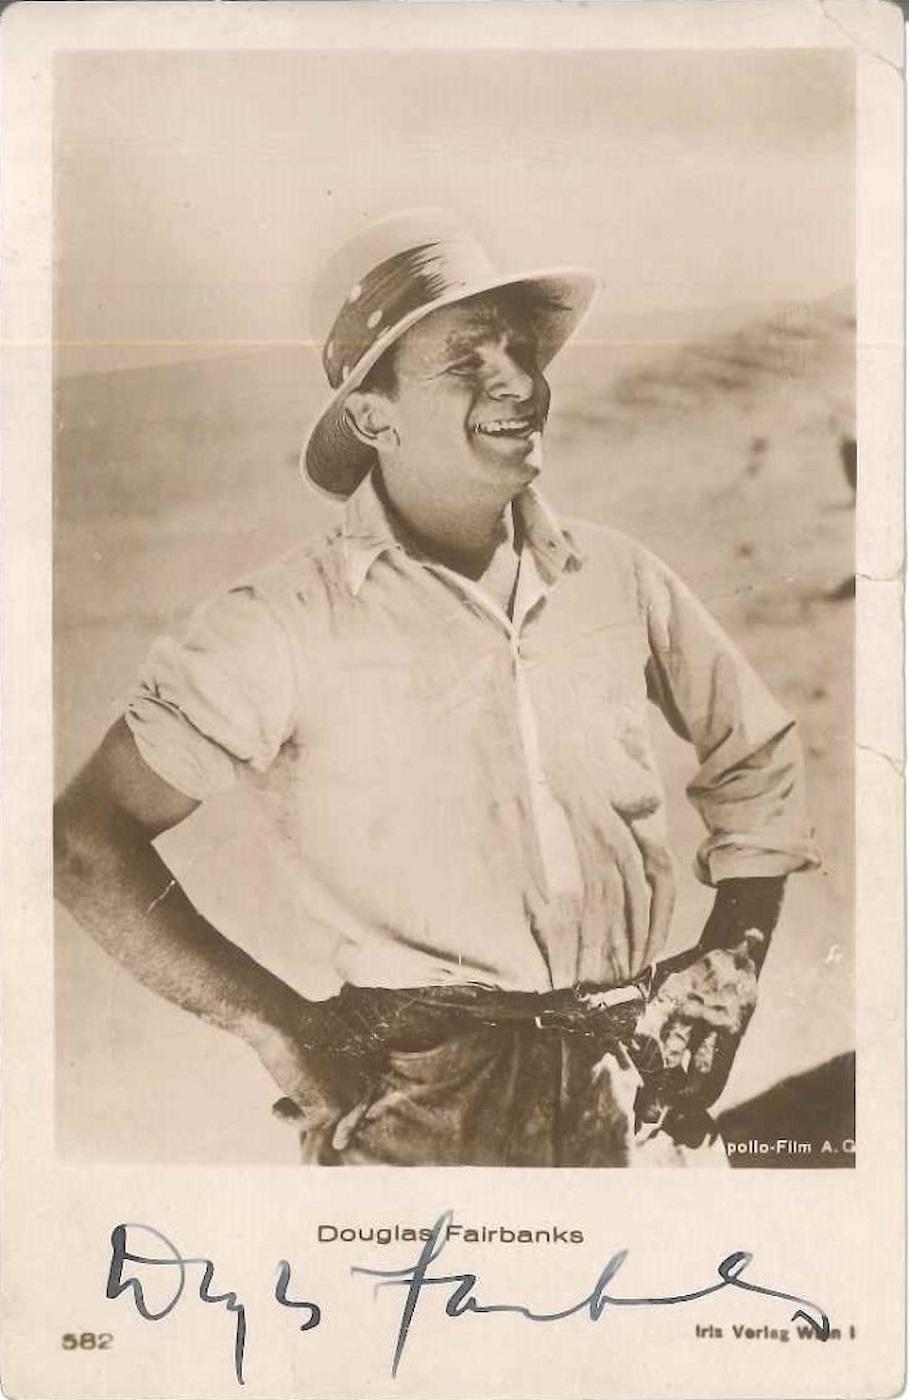 Photo-postcard with Portrait and Autograph by Douglas Fairbanks - 1930 ca.